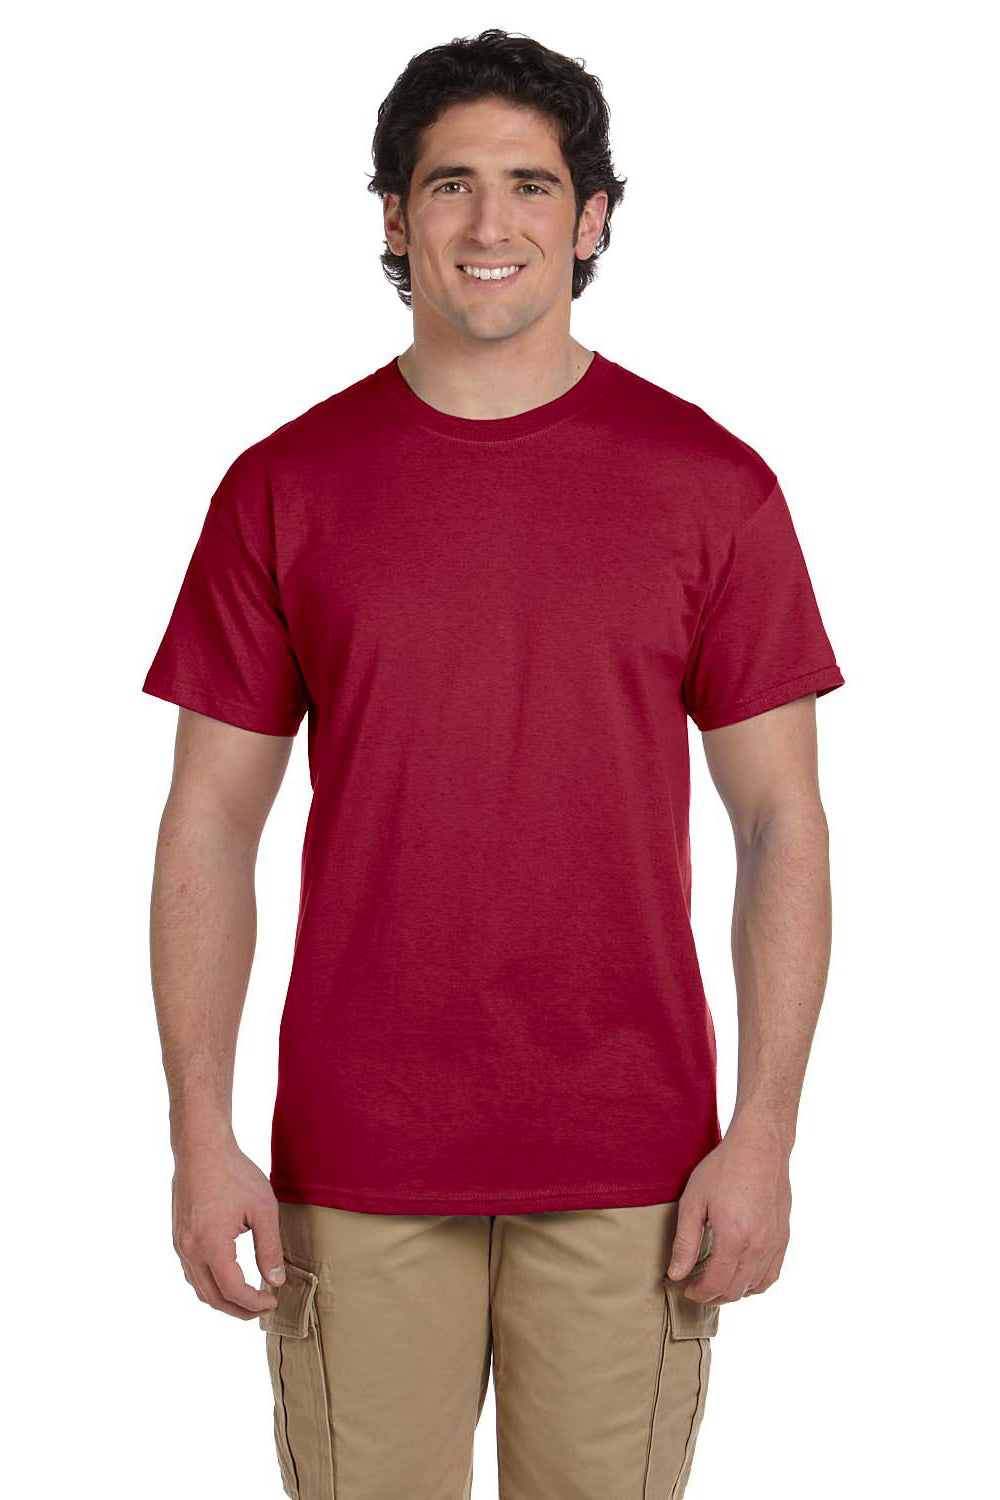 Fruit of The Loom HD Cotton T-Shirt Cardinal XL